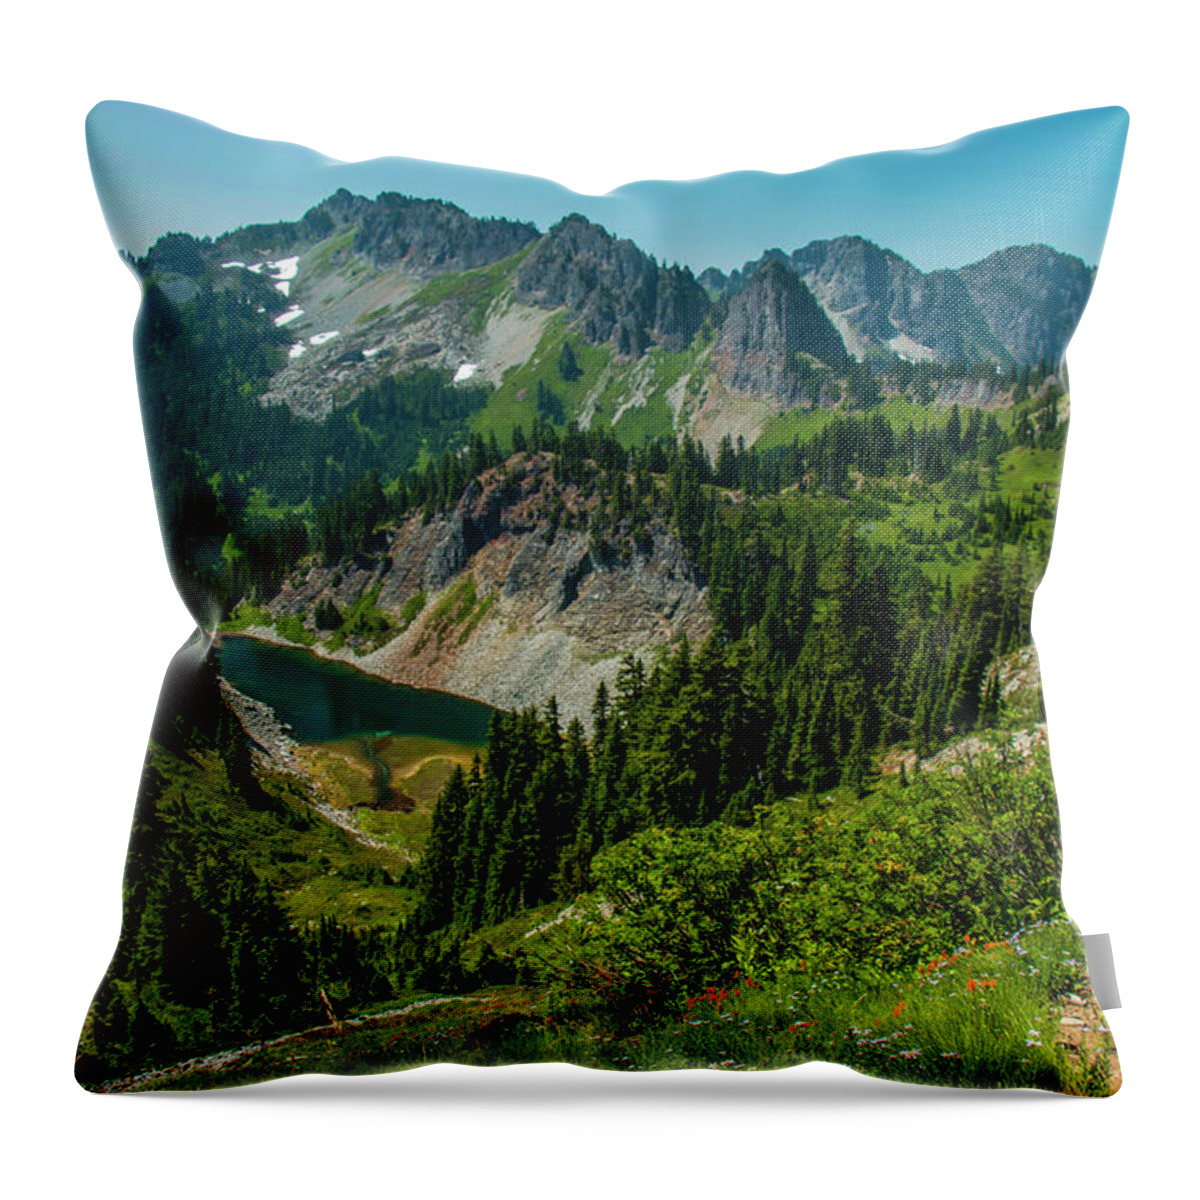 Mount Rainier National Park Throw Pillow featuring the photograph Nestled Beneath the Cliffs by Doug Scrima